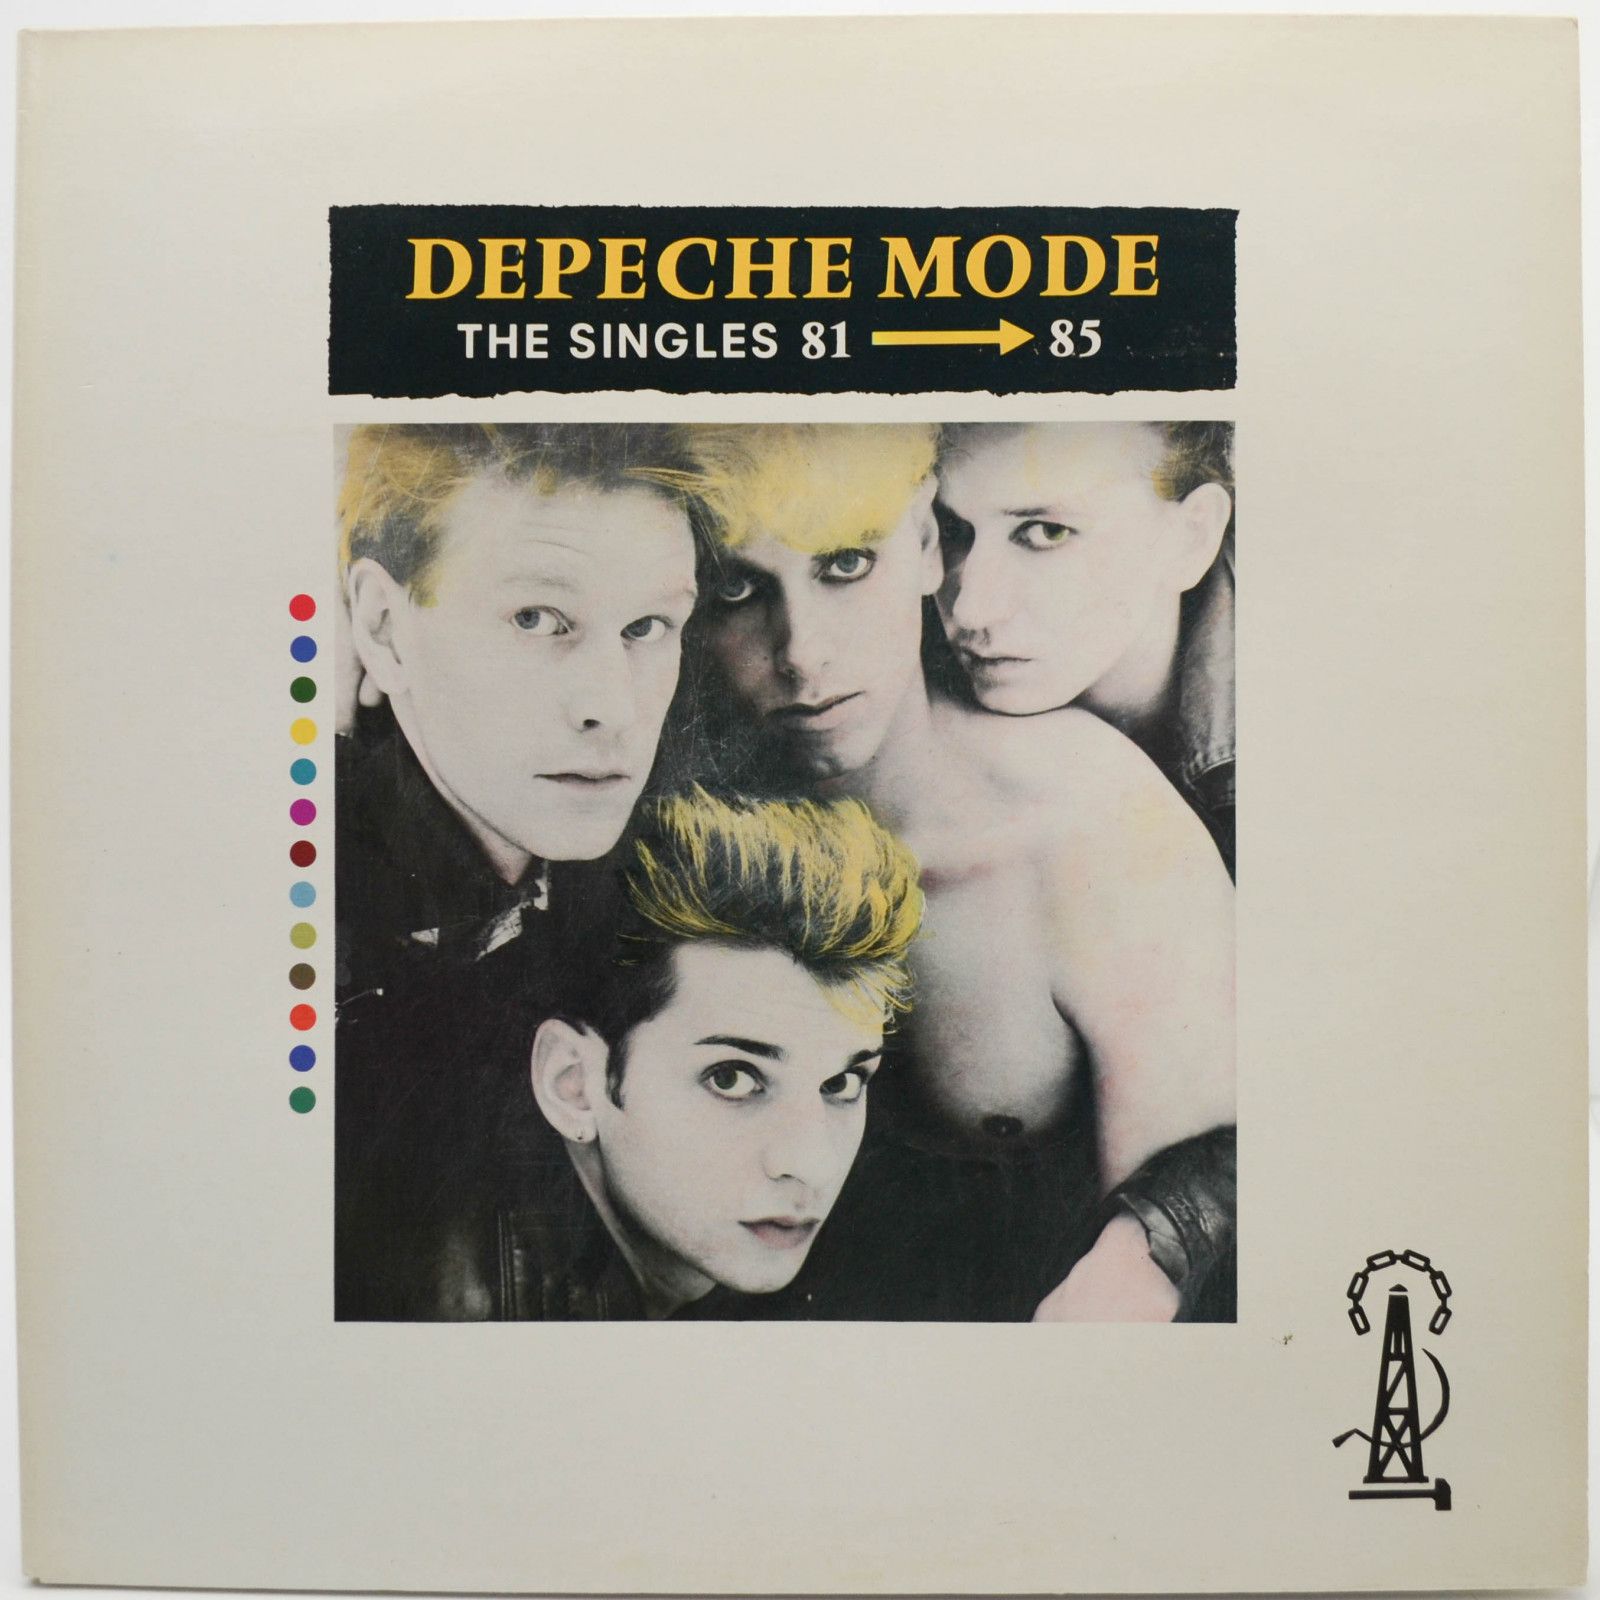 Depeche Mode — The Singles 81 - 85, 1985